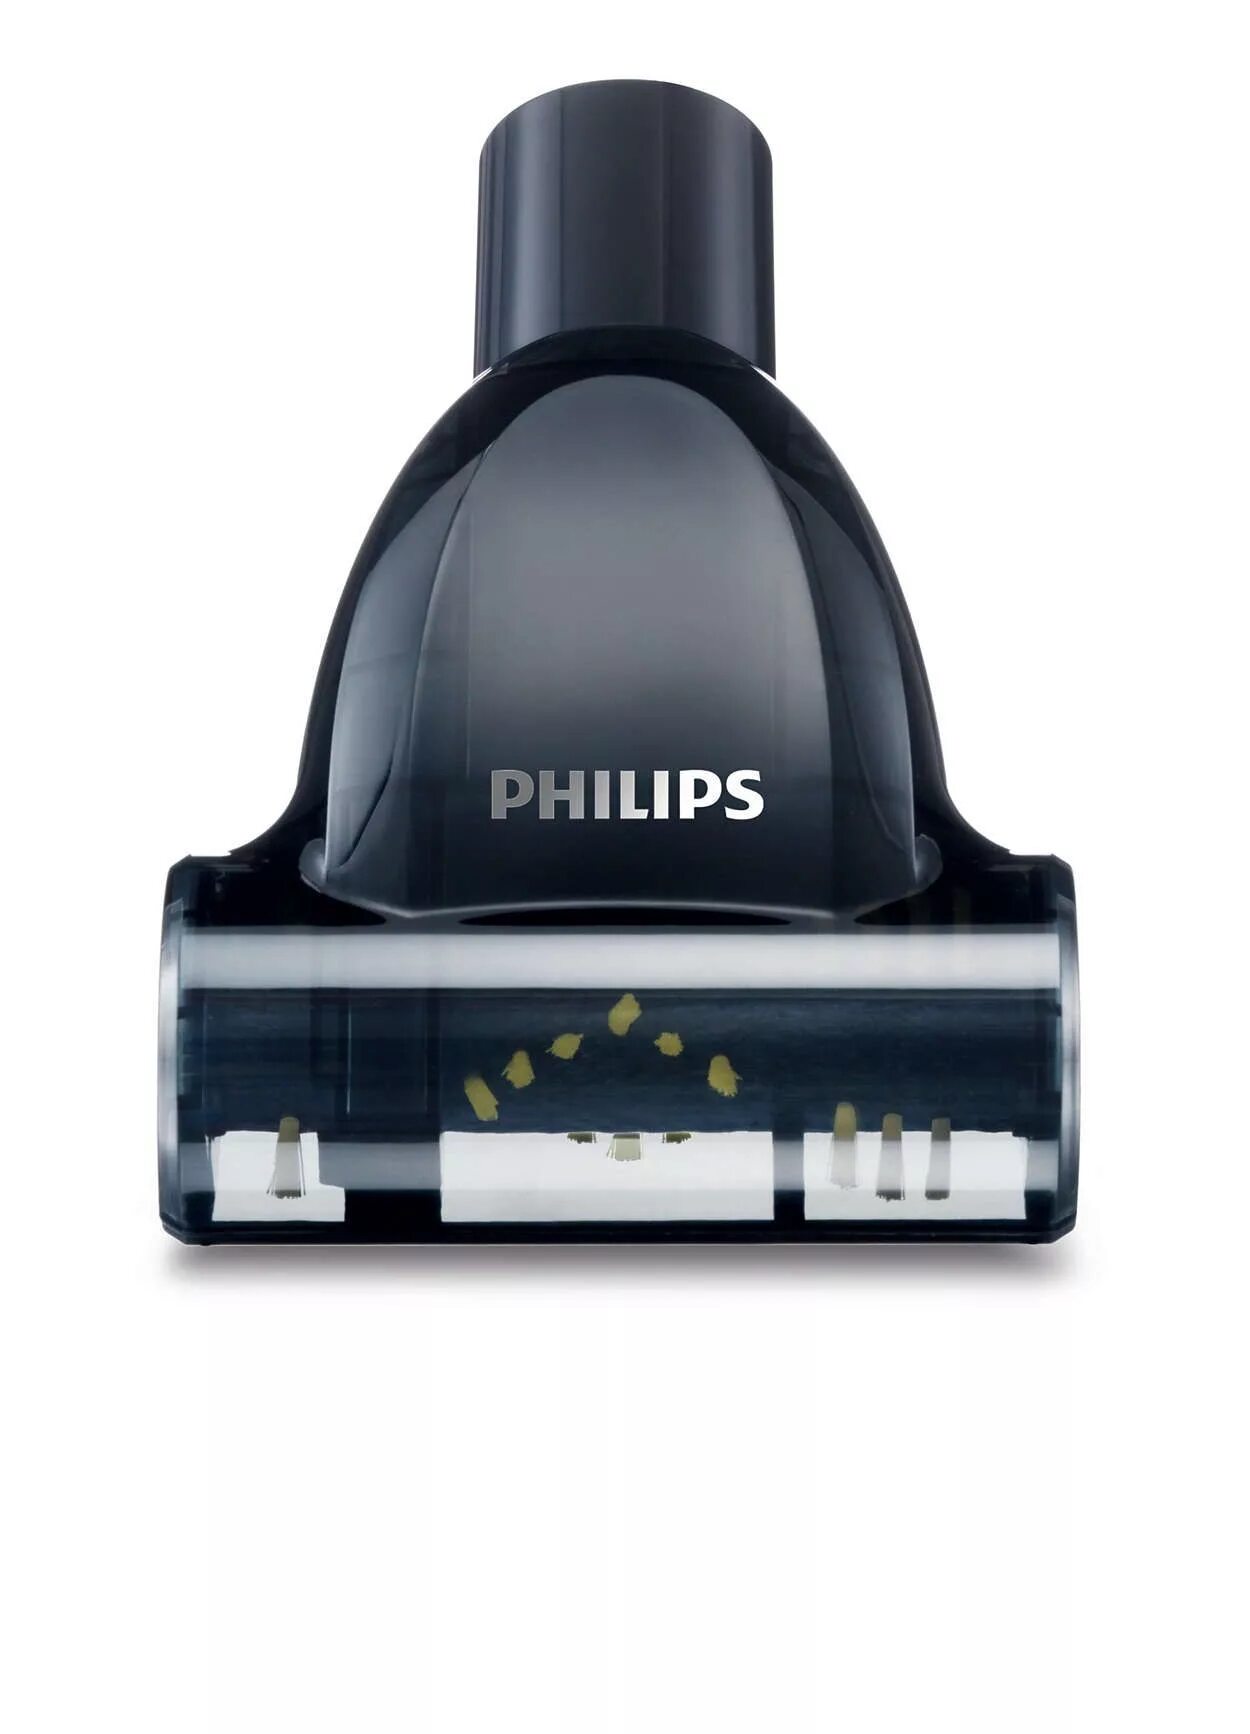 Пылесос Philips fc8455 POWERLIFE. Philips fc8455 POWERLIFE. Пылесос Philips fc8455/01. Филипс FC 8455 пылесос. Турбощетка филипс